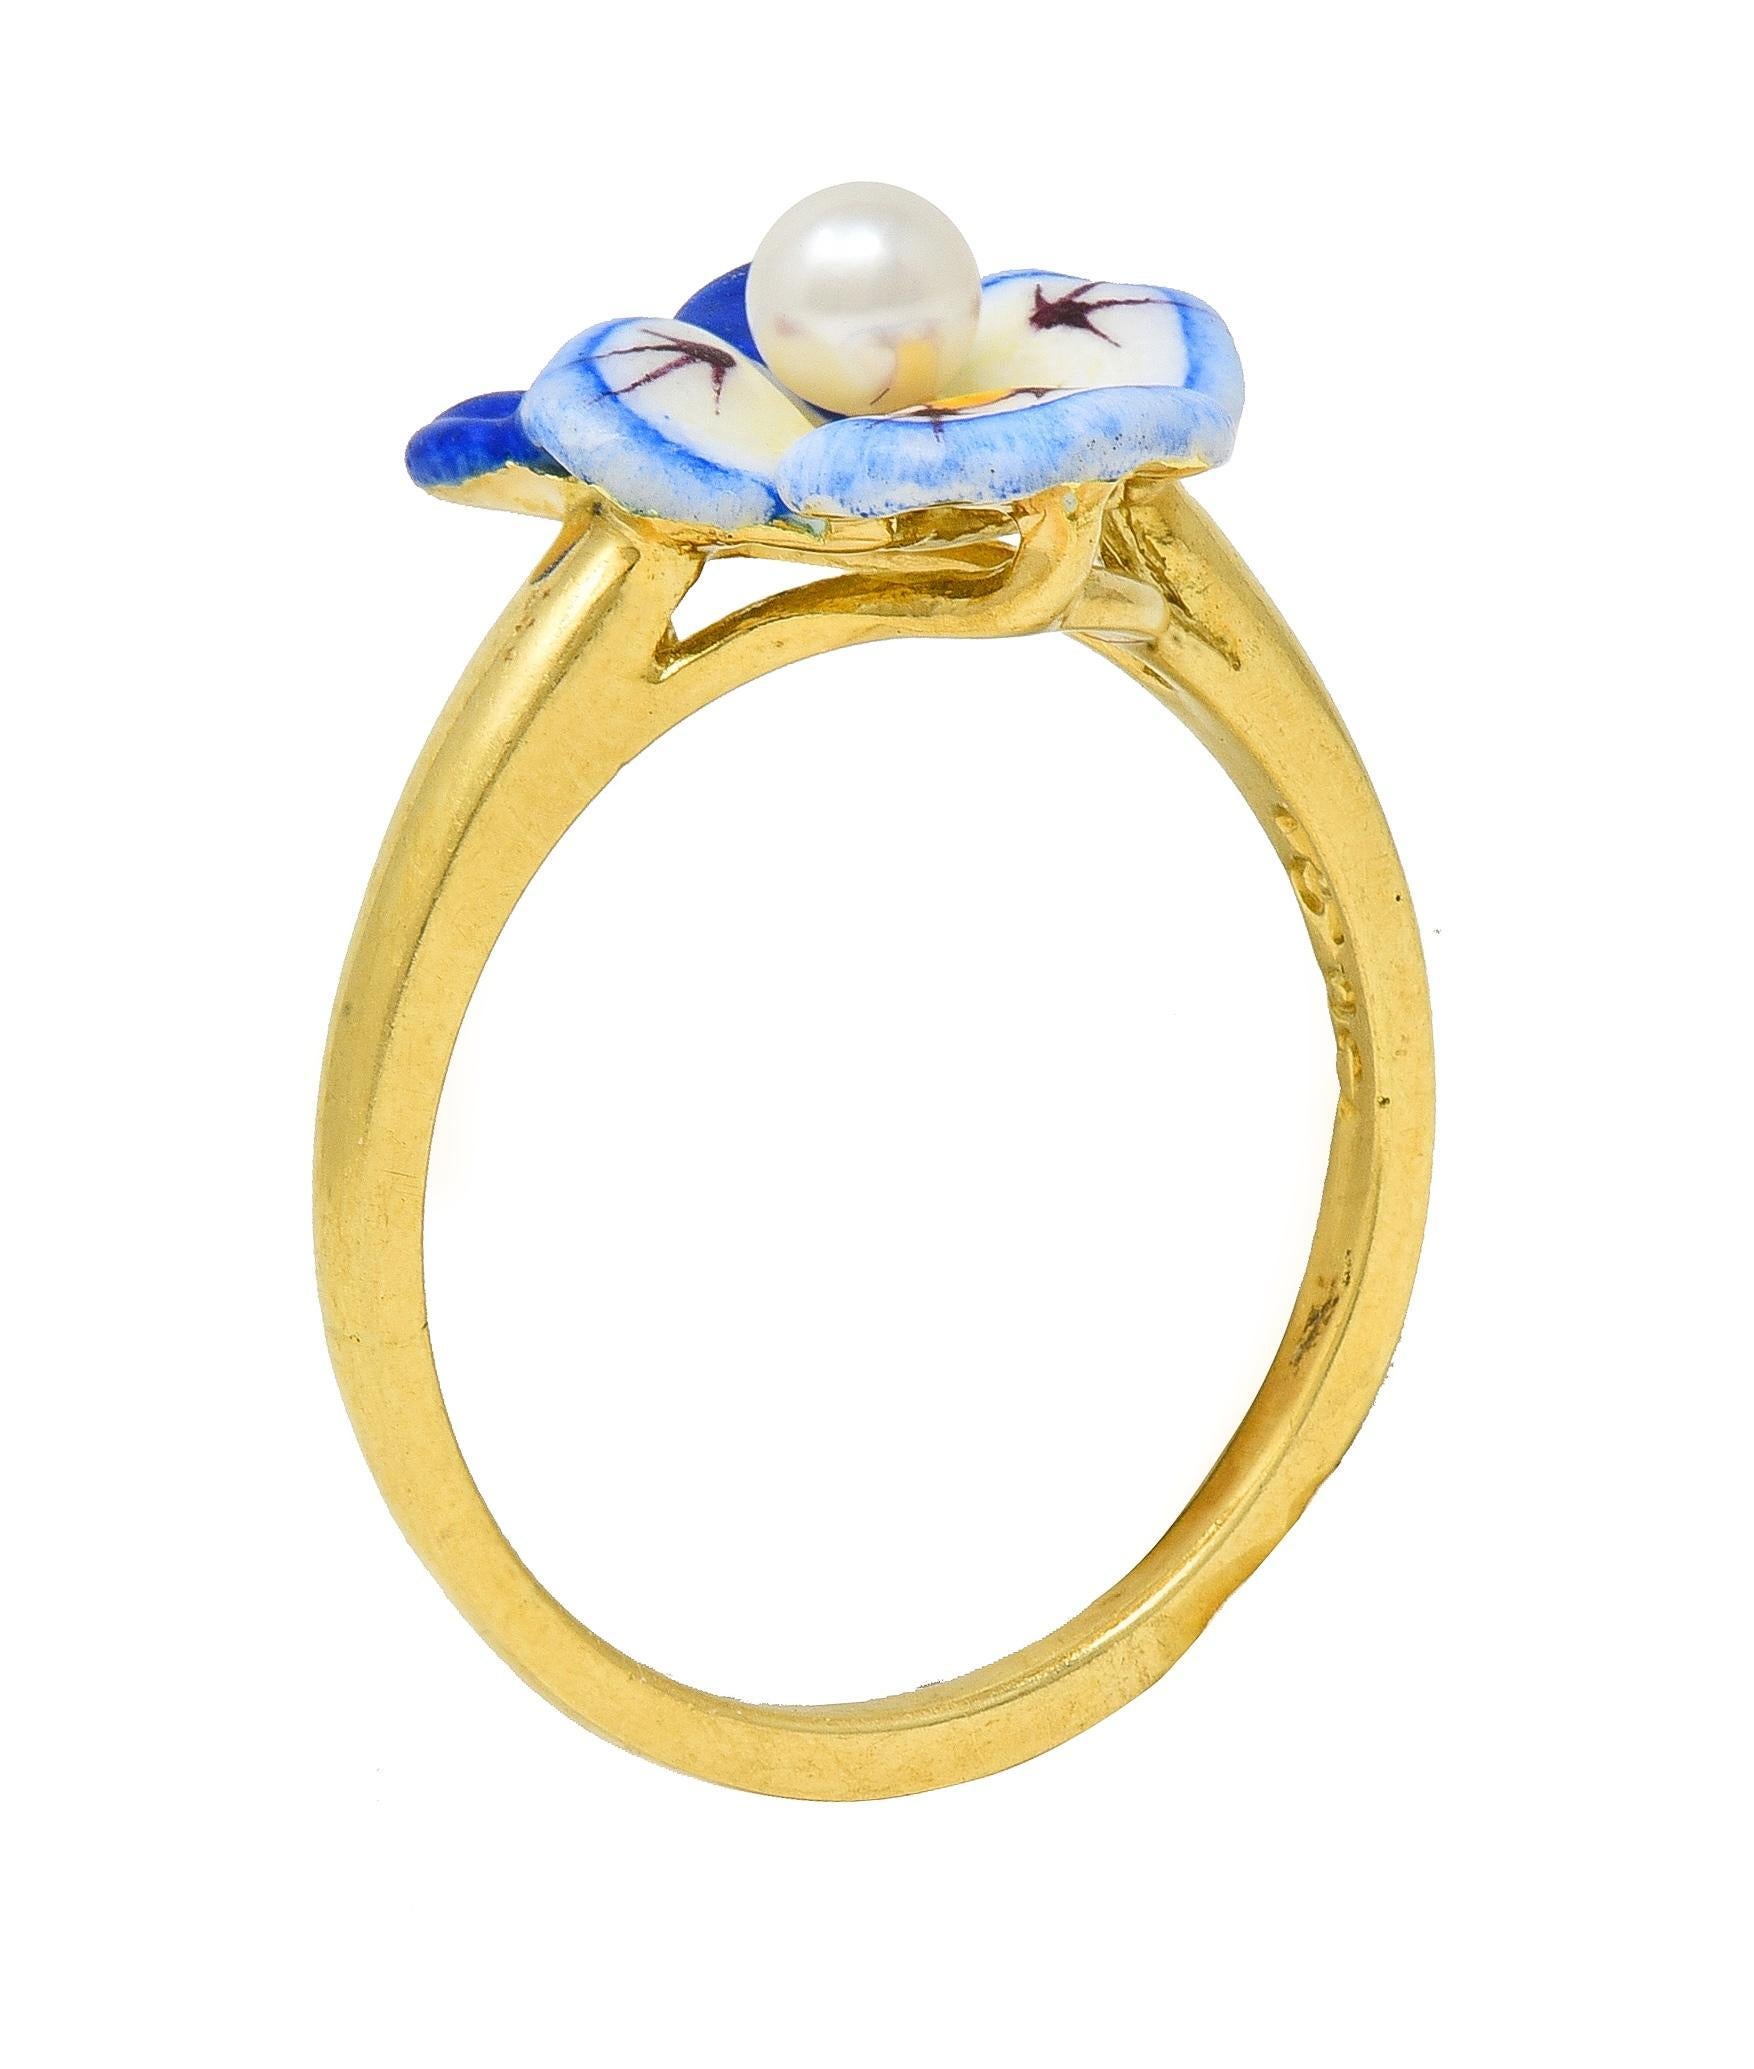 Larter & Sons Art Nouveau Pearl Enamel 18 Karat Yellow Gold Pansy Ring 5